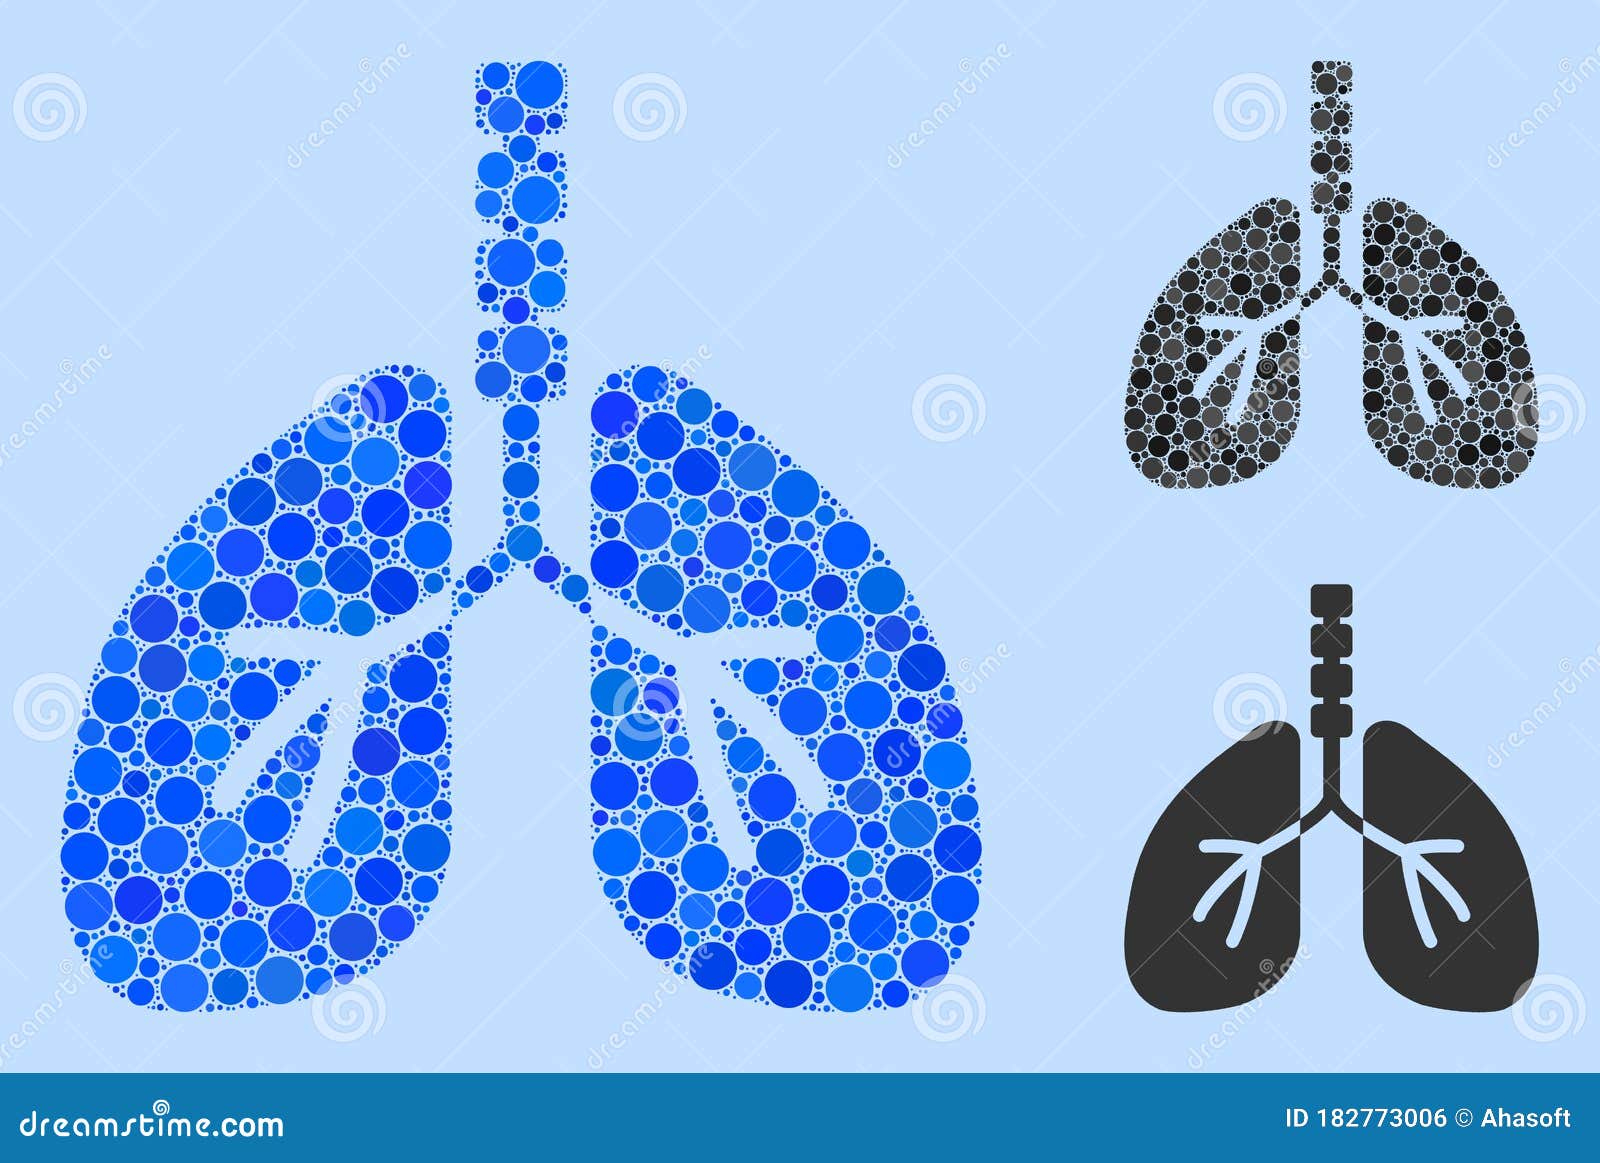 round dot breathe system icon collage